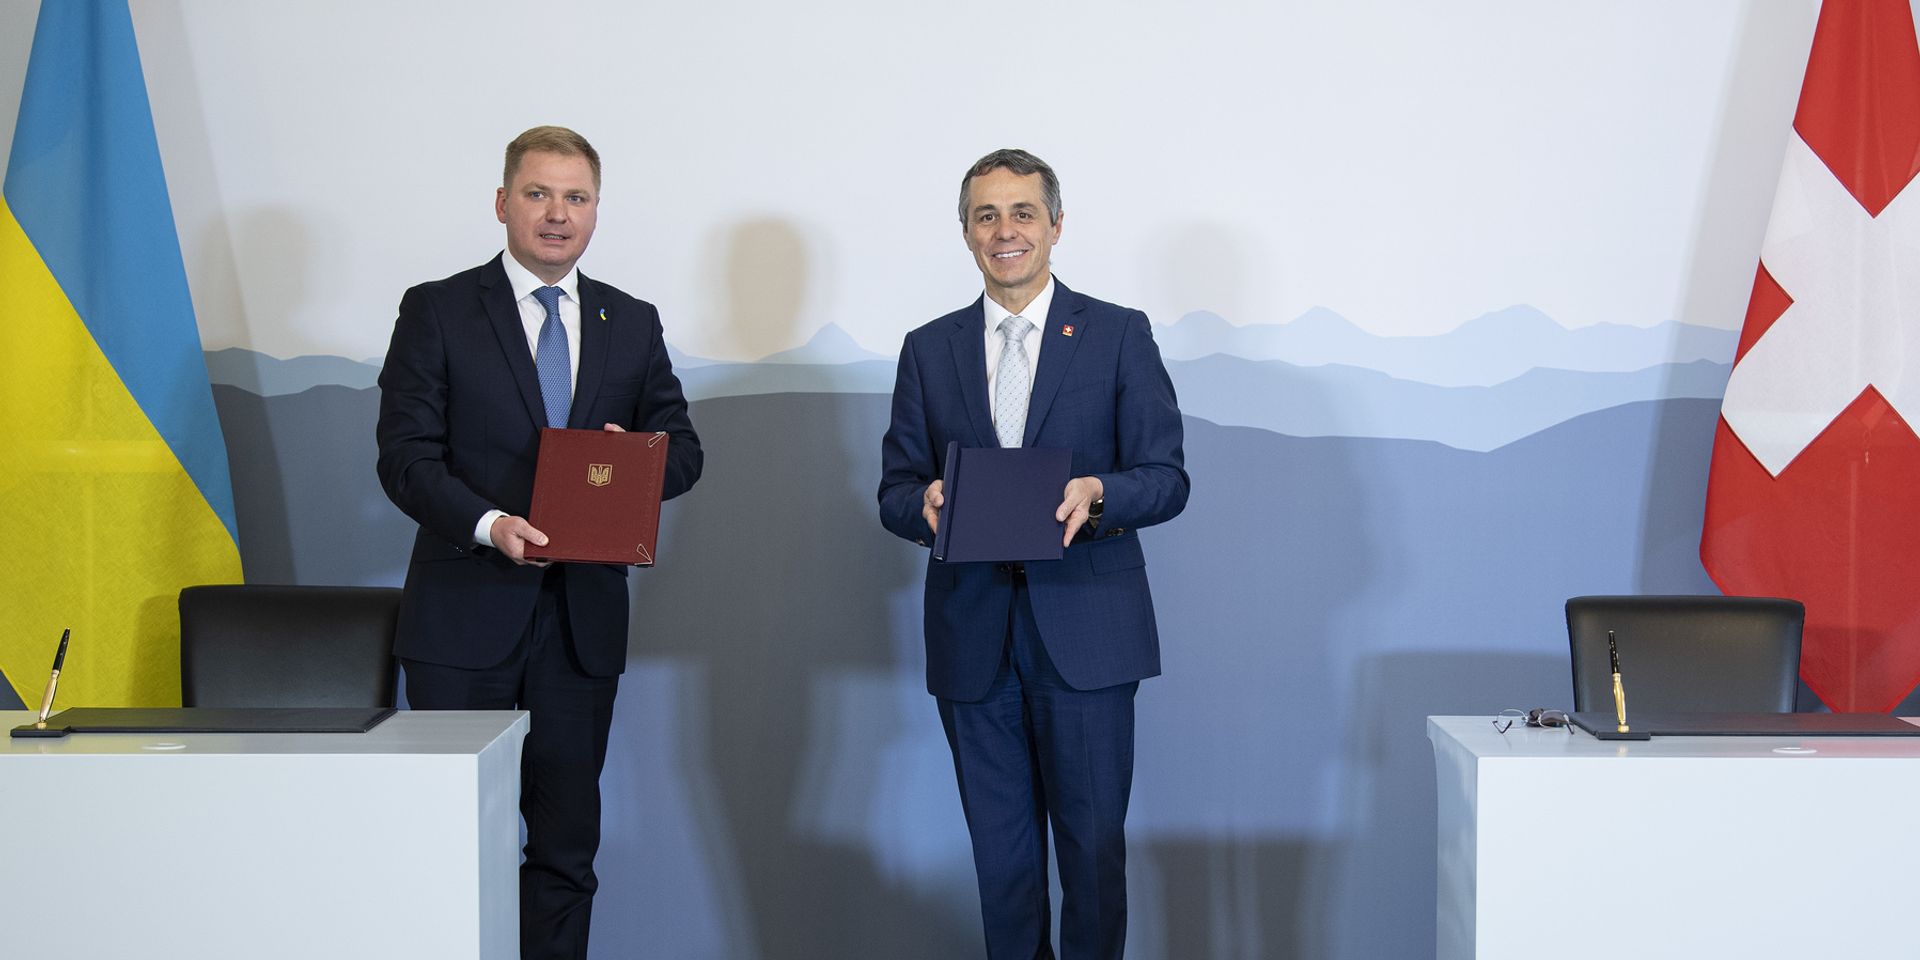 The Ukrainian Ambassador to Switzerland, Artem Rybchenko, and Federal Councillor Ignazio Cassis at the signing of the Memorandum of Understanding on 30 June 2020 in Bern.